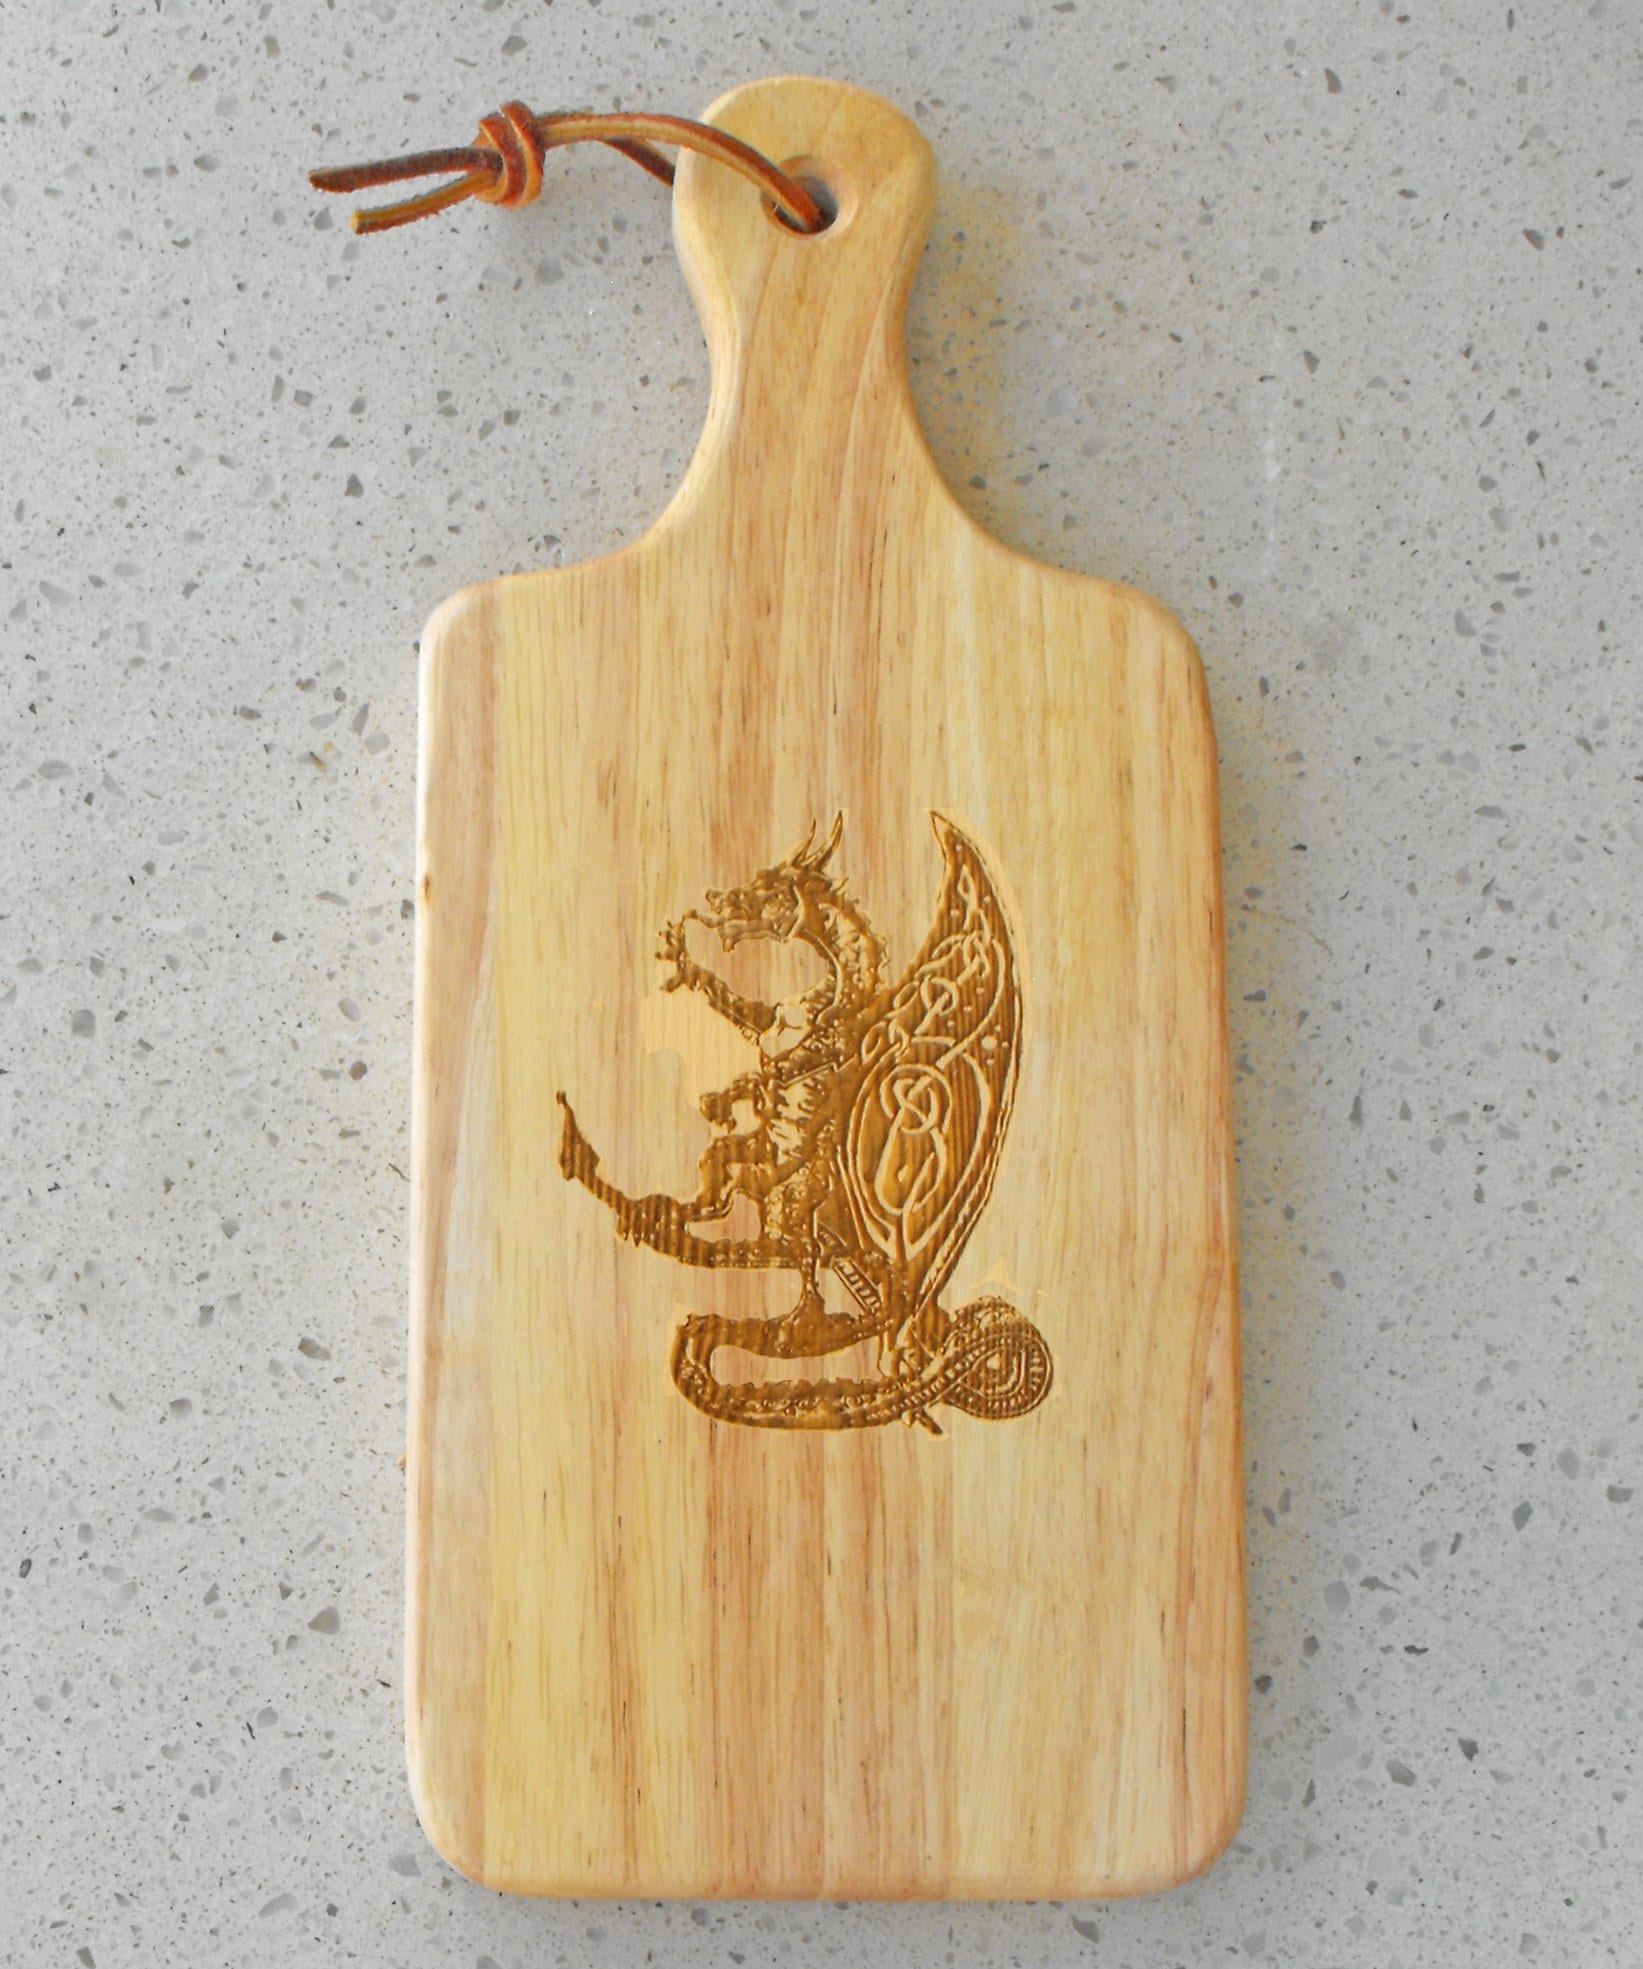 Custom Cutting Board With RYE Laser Engraved Handmade Wooden